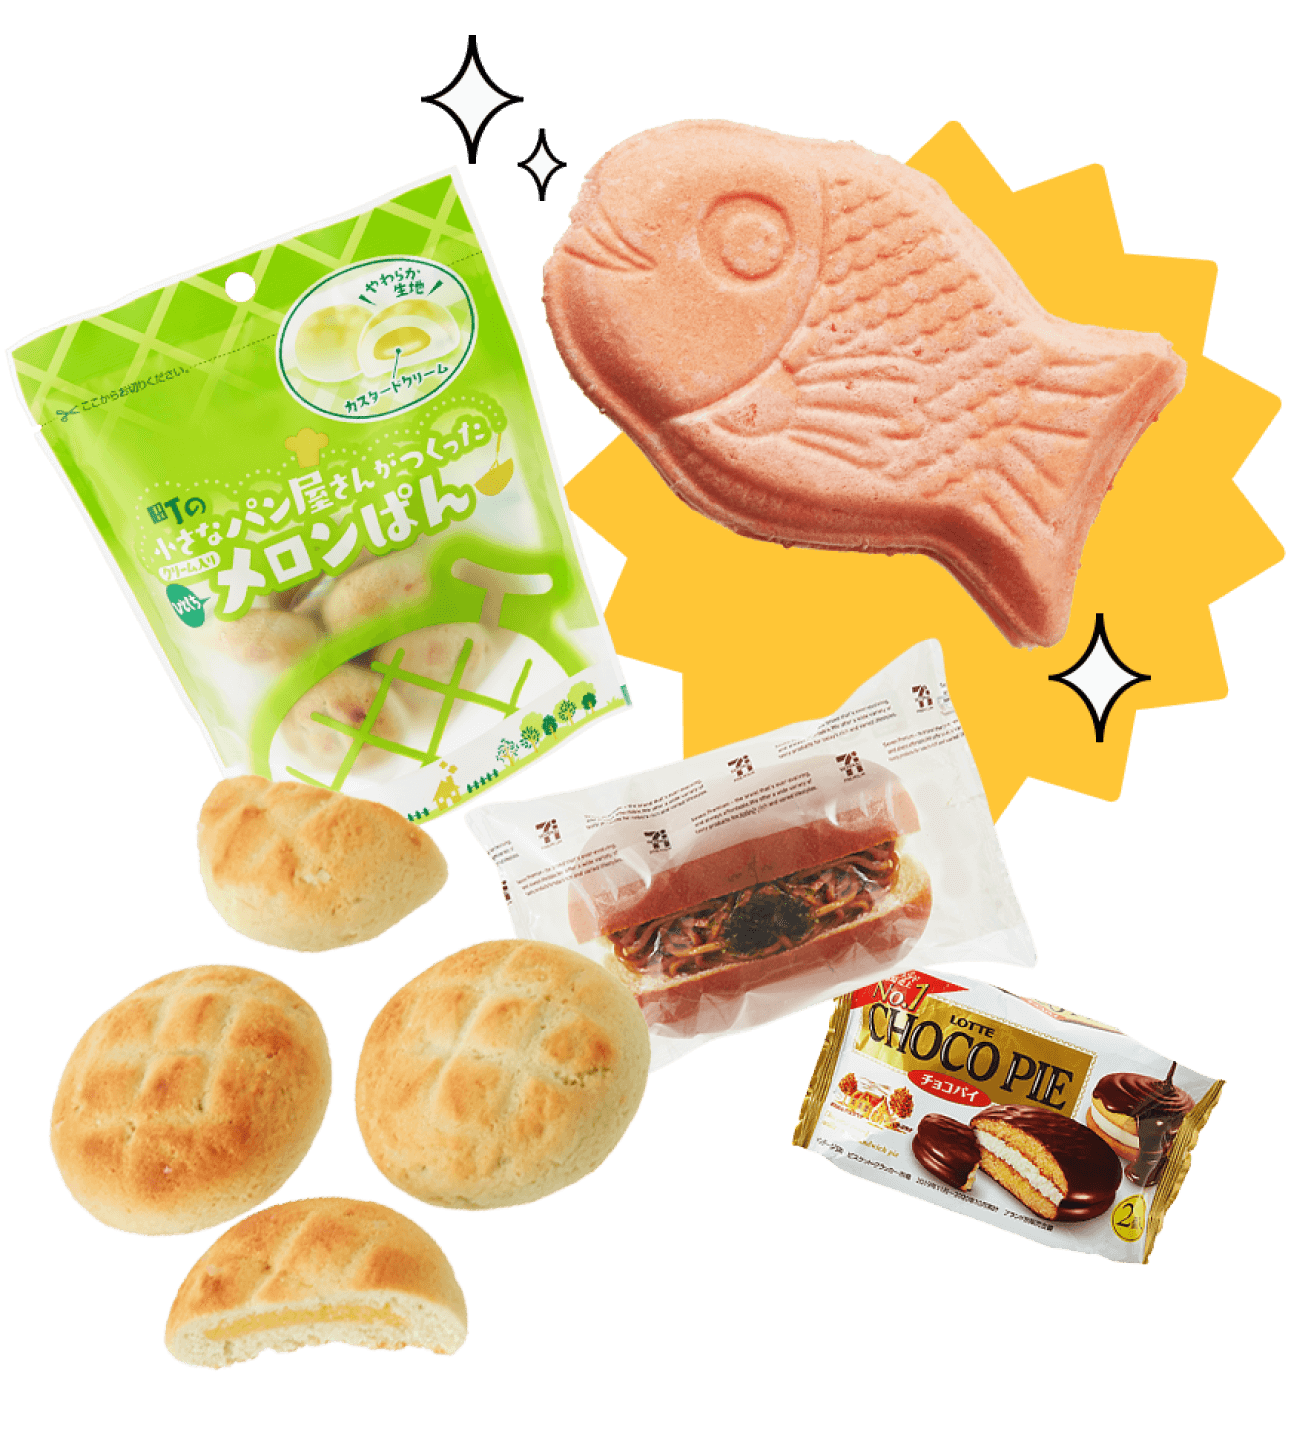 Japanese Baked Goods & Bread Snacks | TokyoTreat